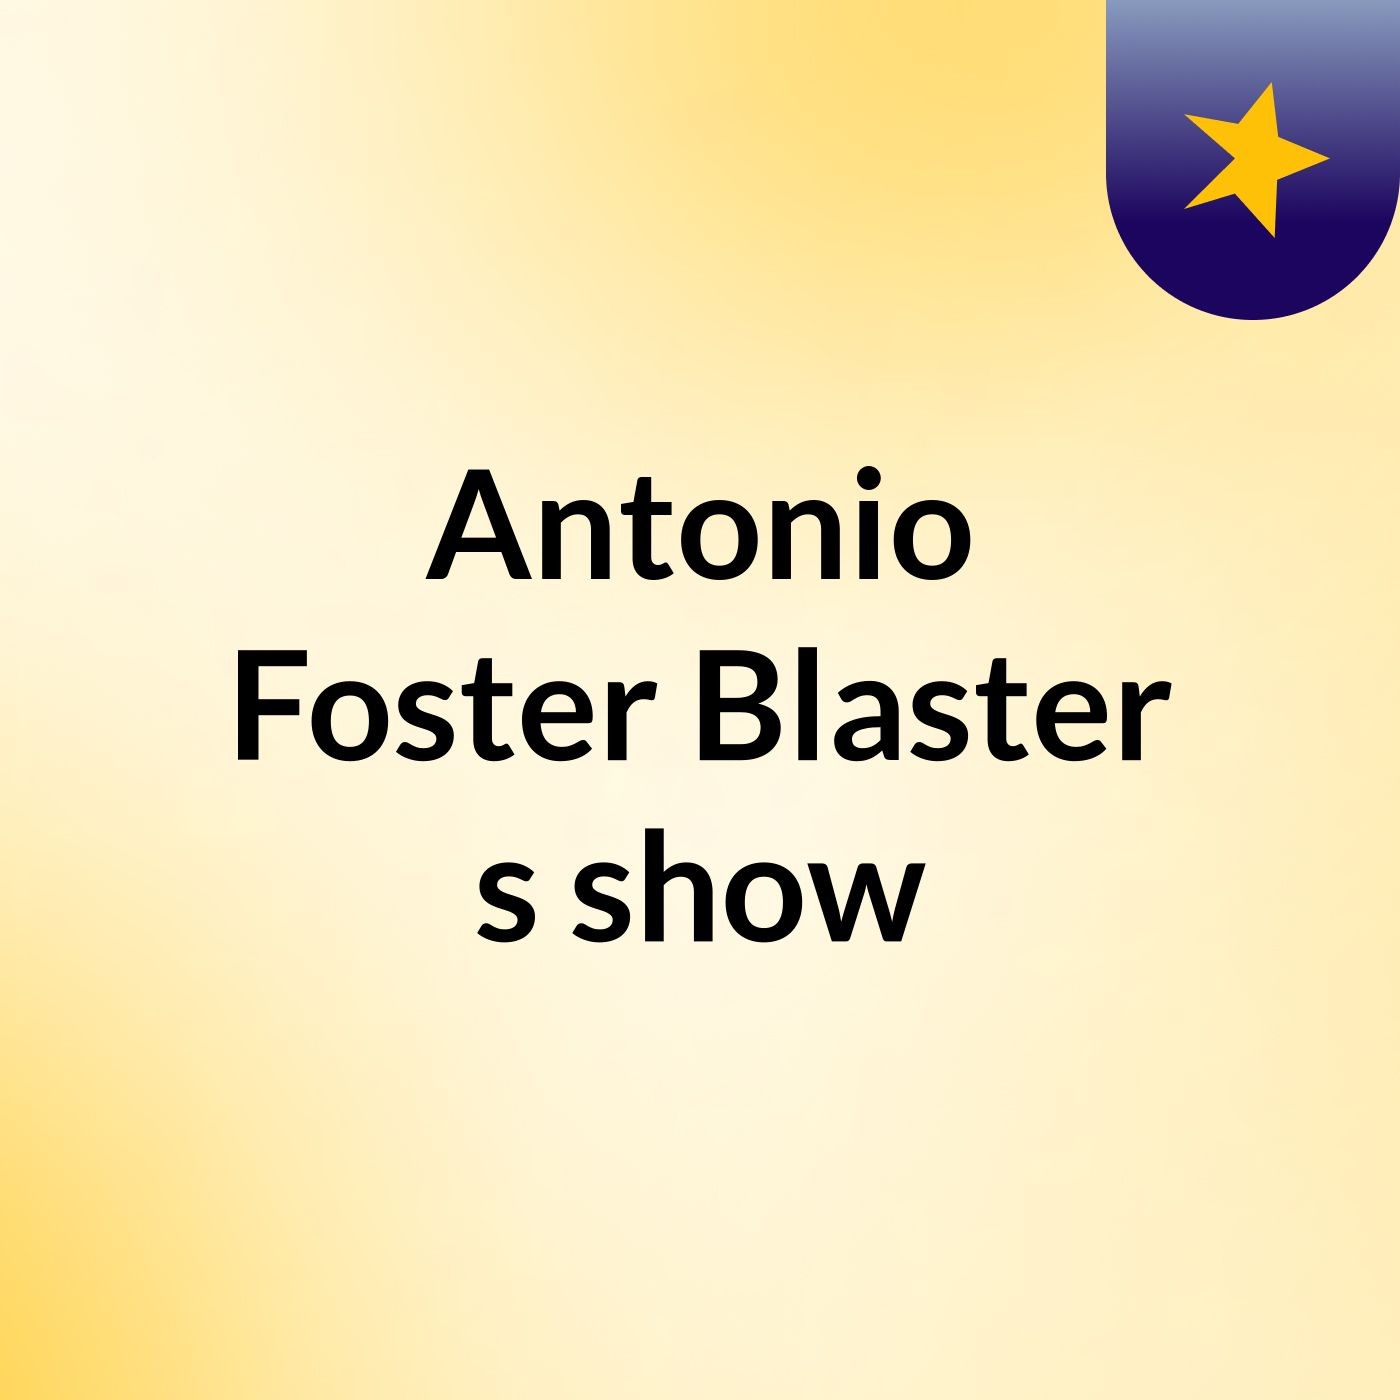 Antonio Foster Blaster's show